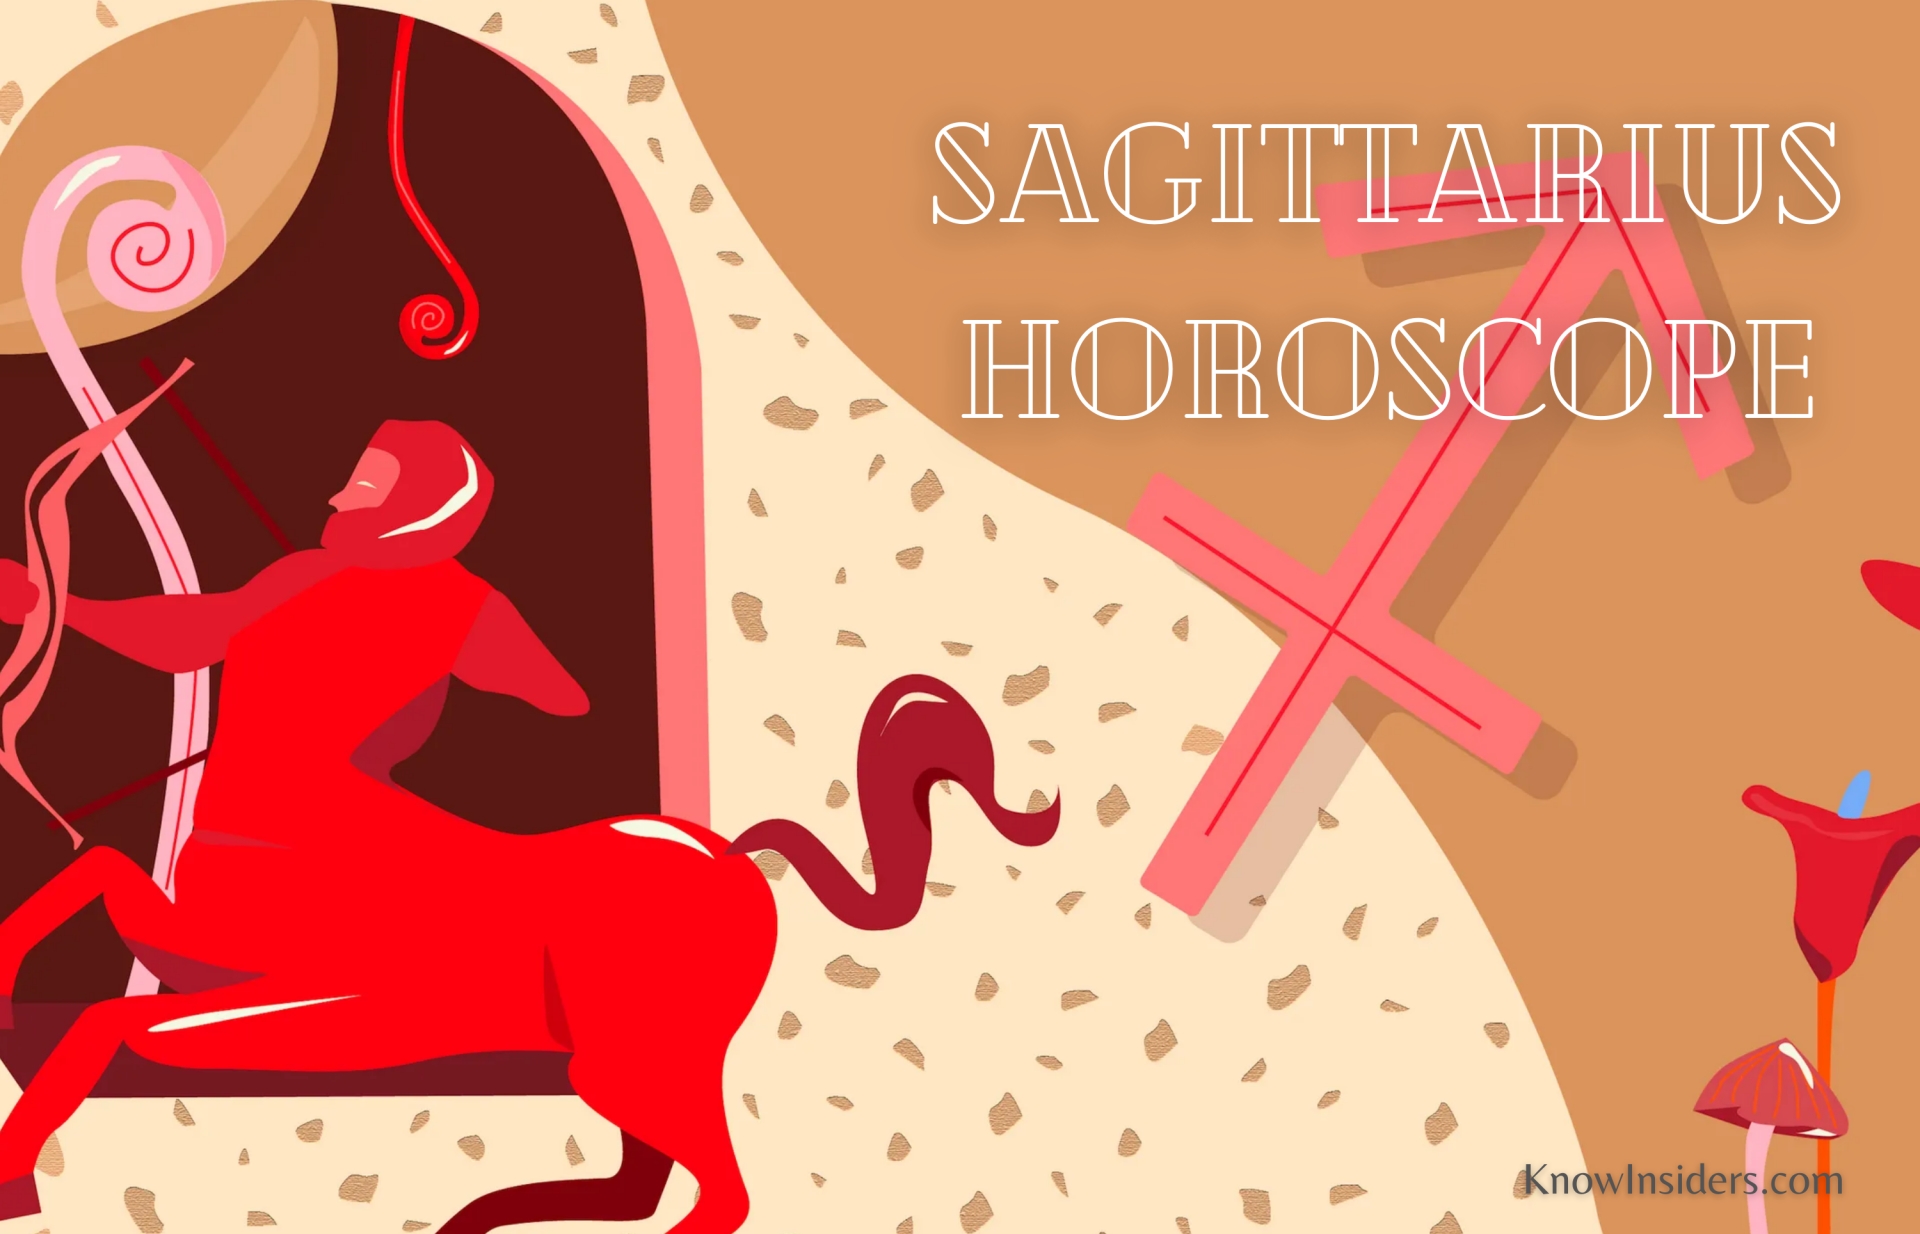 sagittarius zodiac sign characteristics astrological predictions compatibility